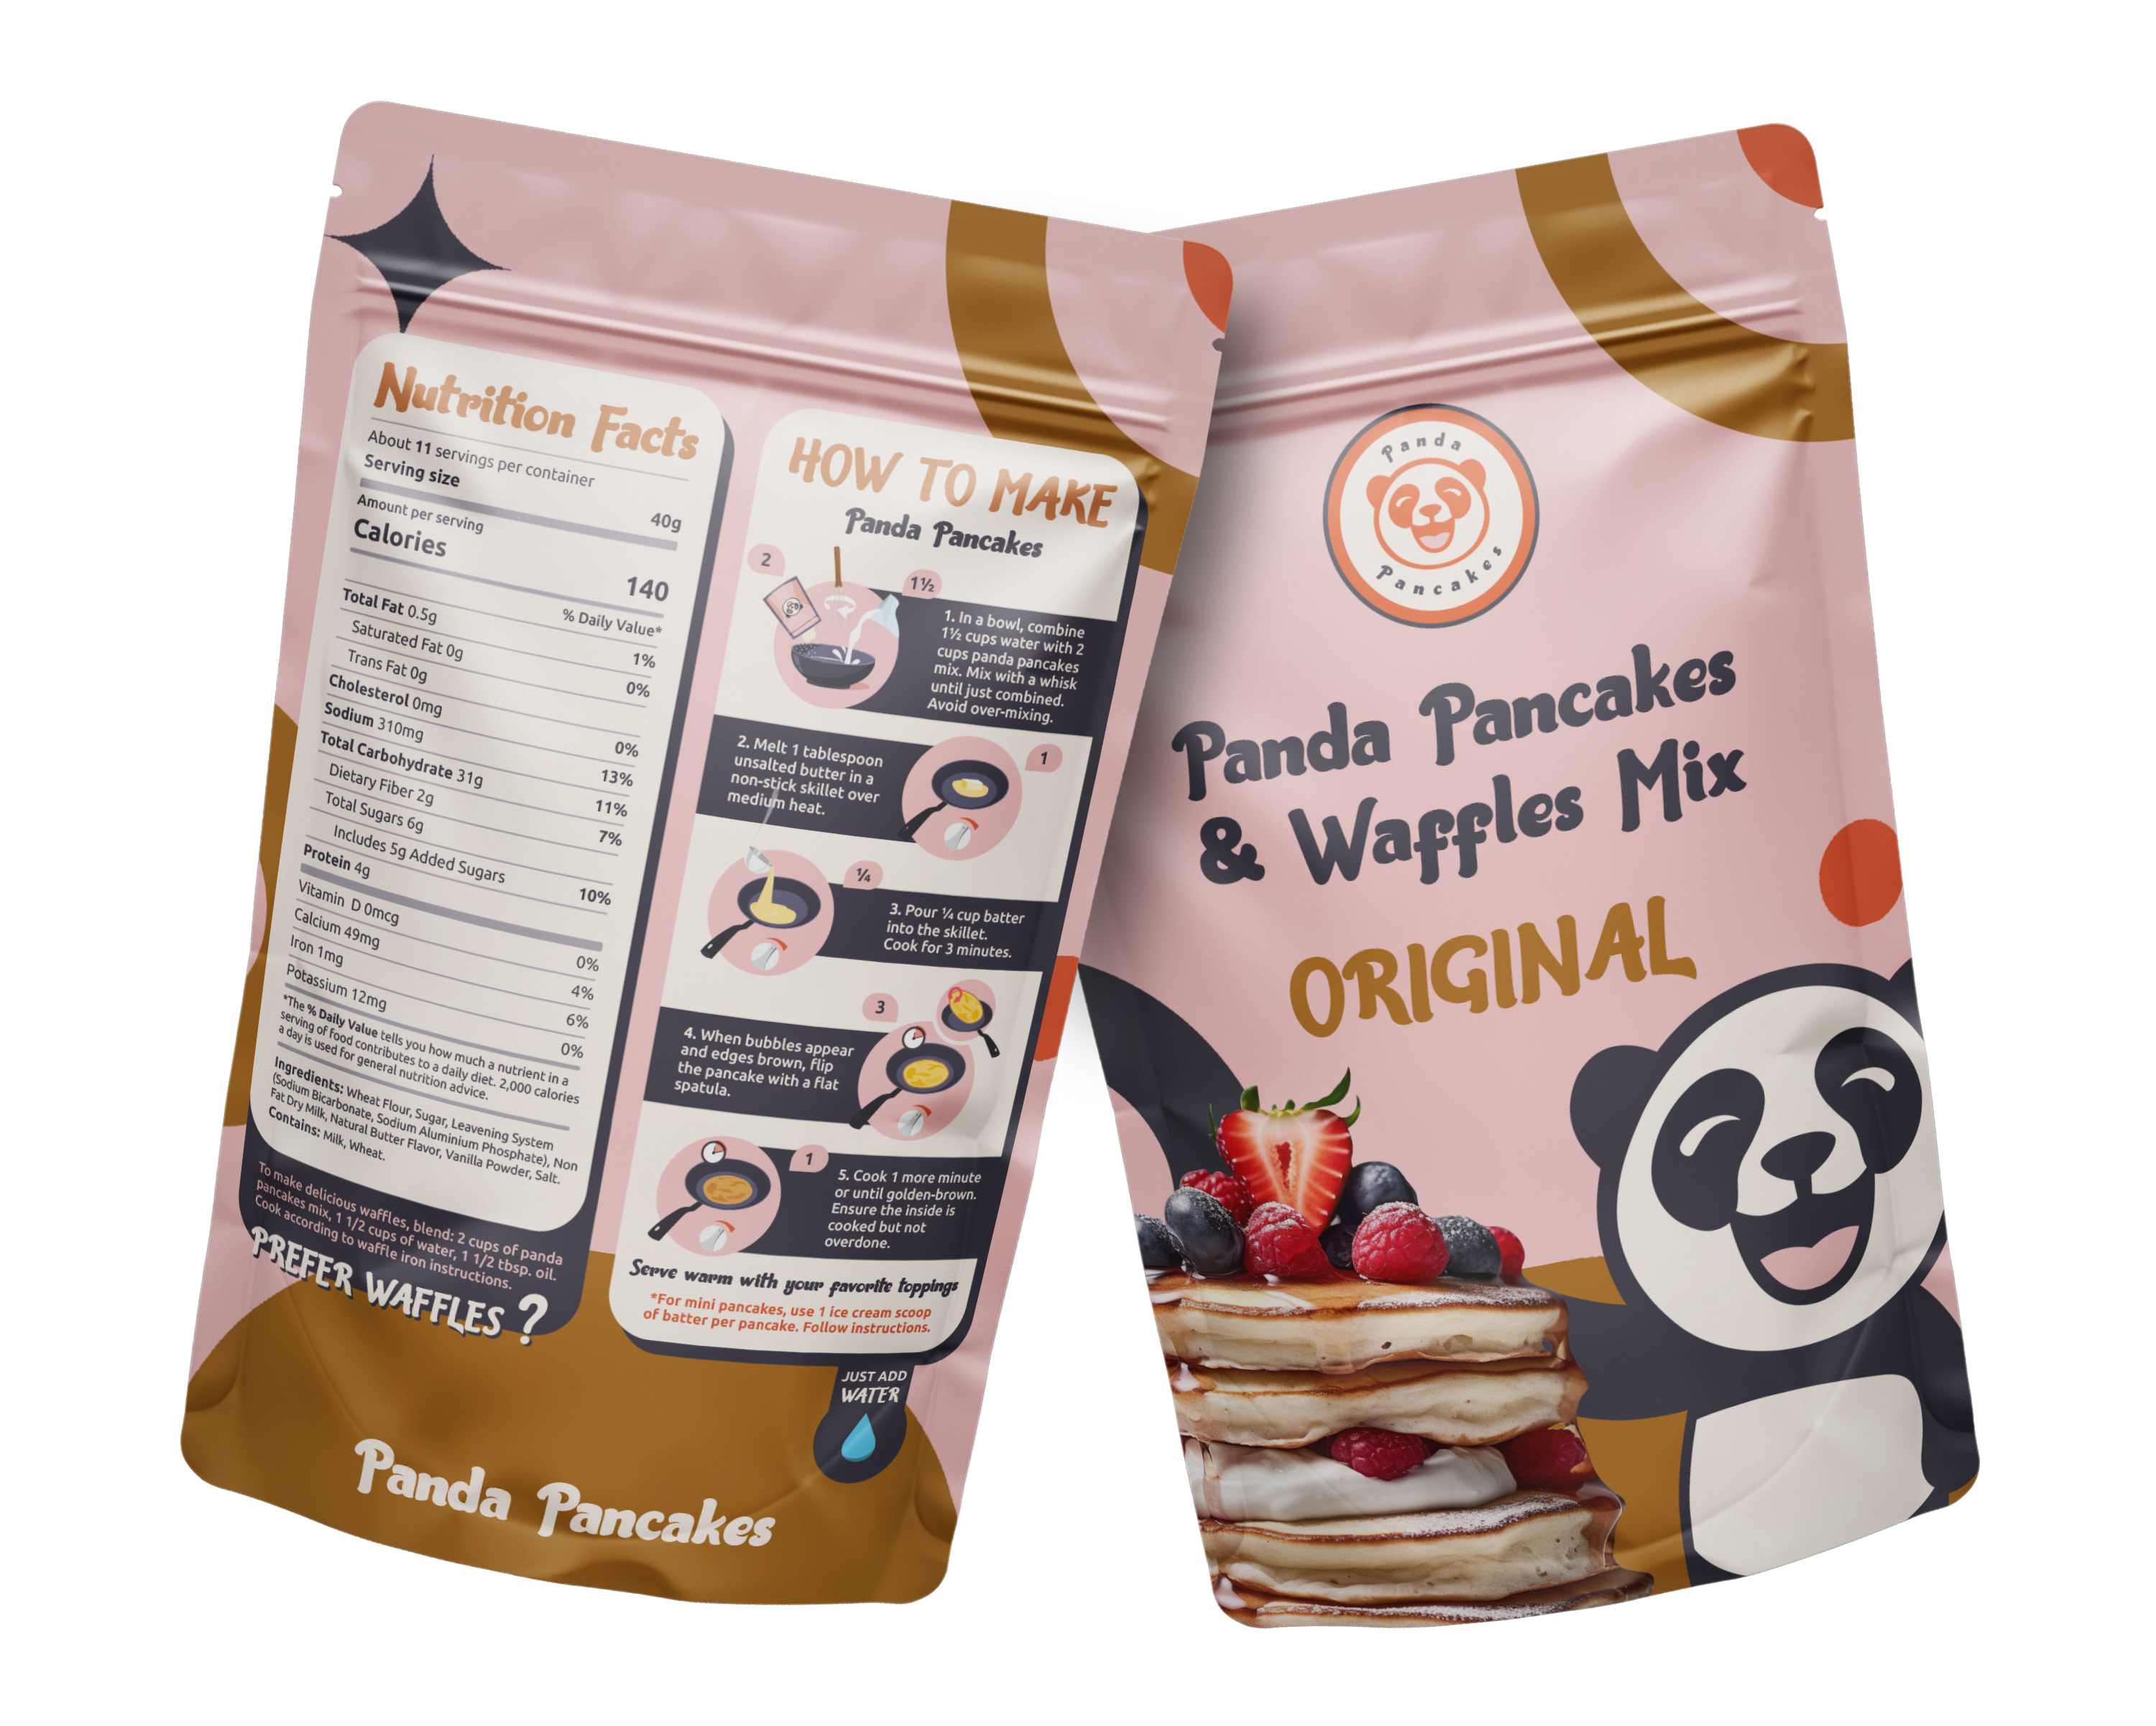 Panda Pancakes & Waffles Mix